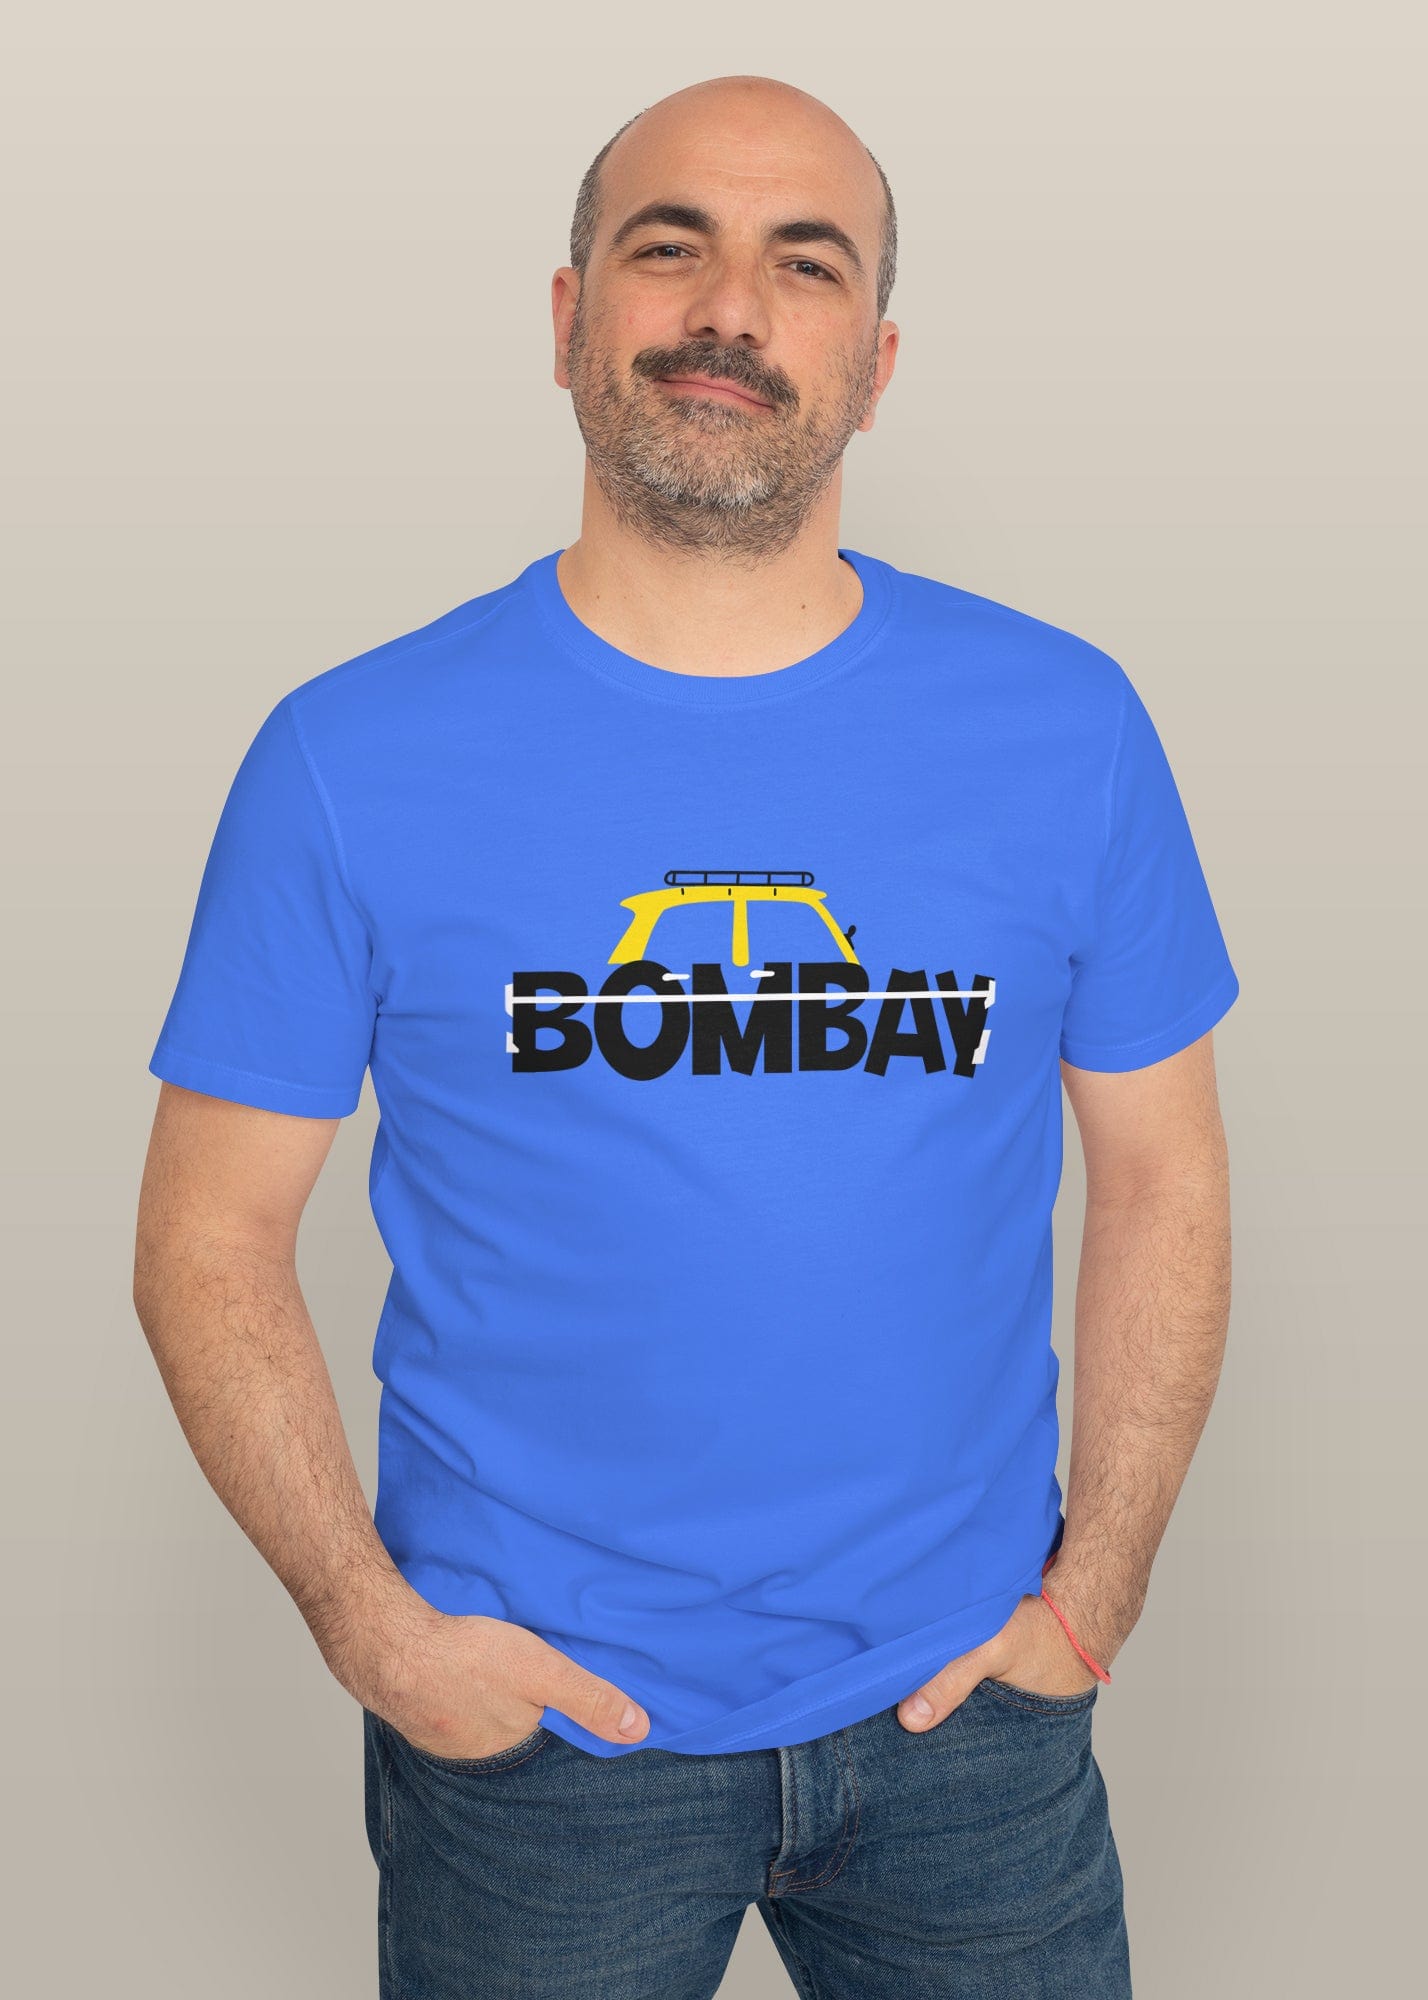 Mumbai Taxi Printed Half Sleeve Premium Cotton T-shirt For Men